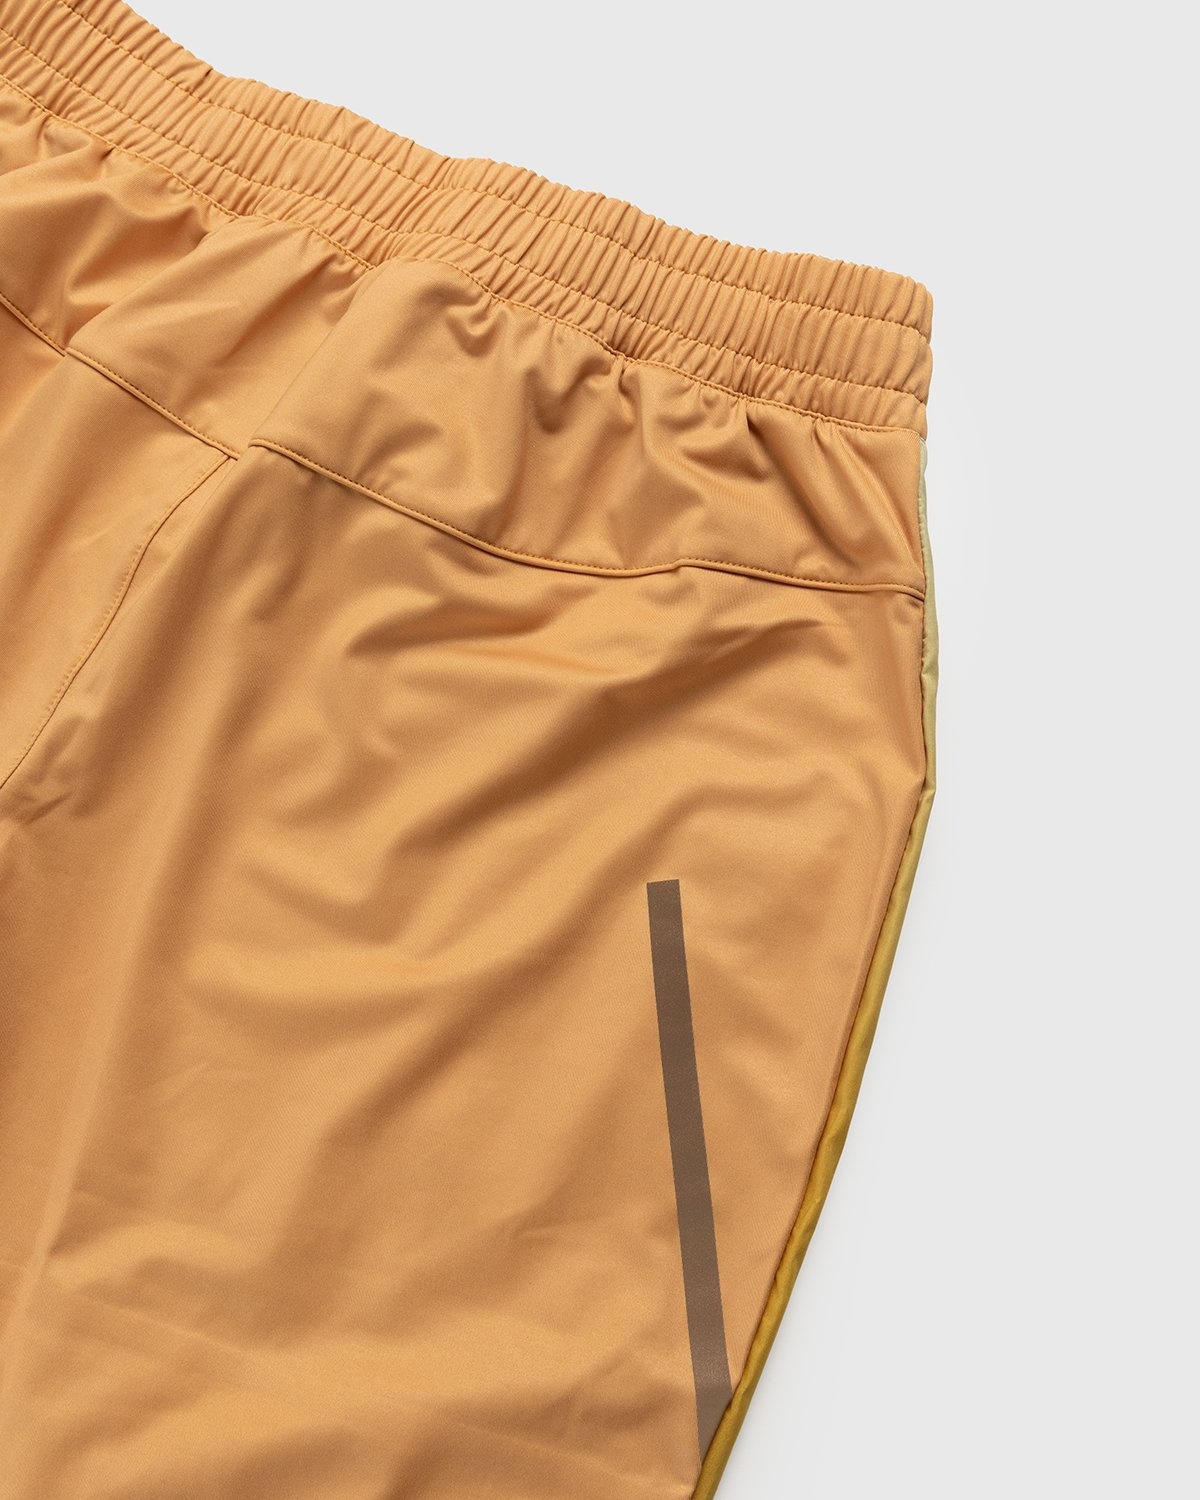 Loewe x On – Women's Technical Running Pants Gradient Orange - Active Pants - Orange - Image 4